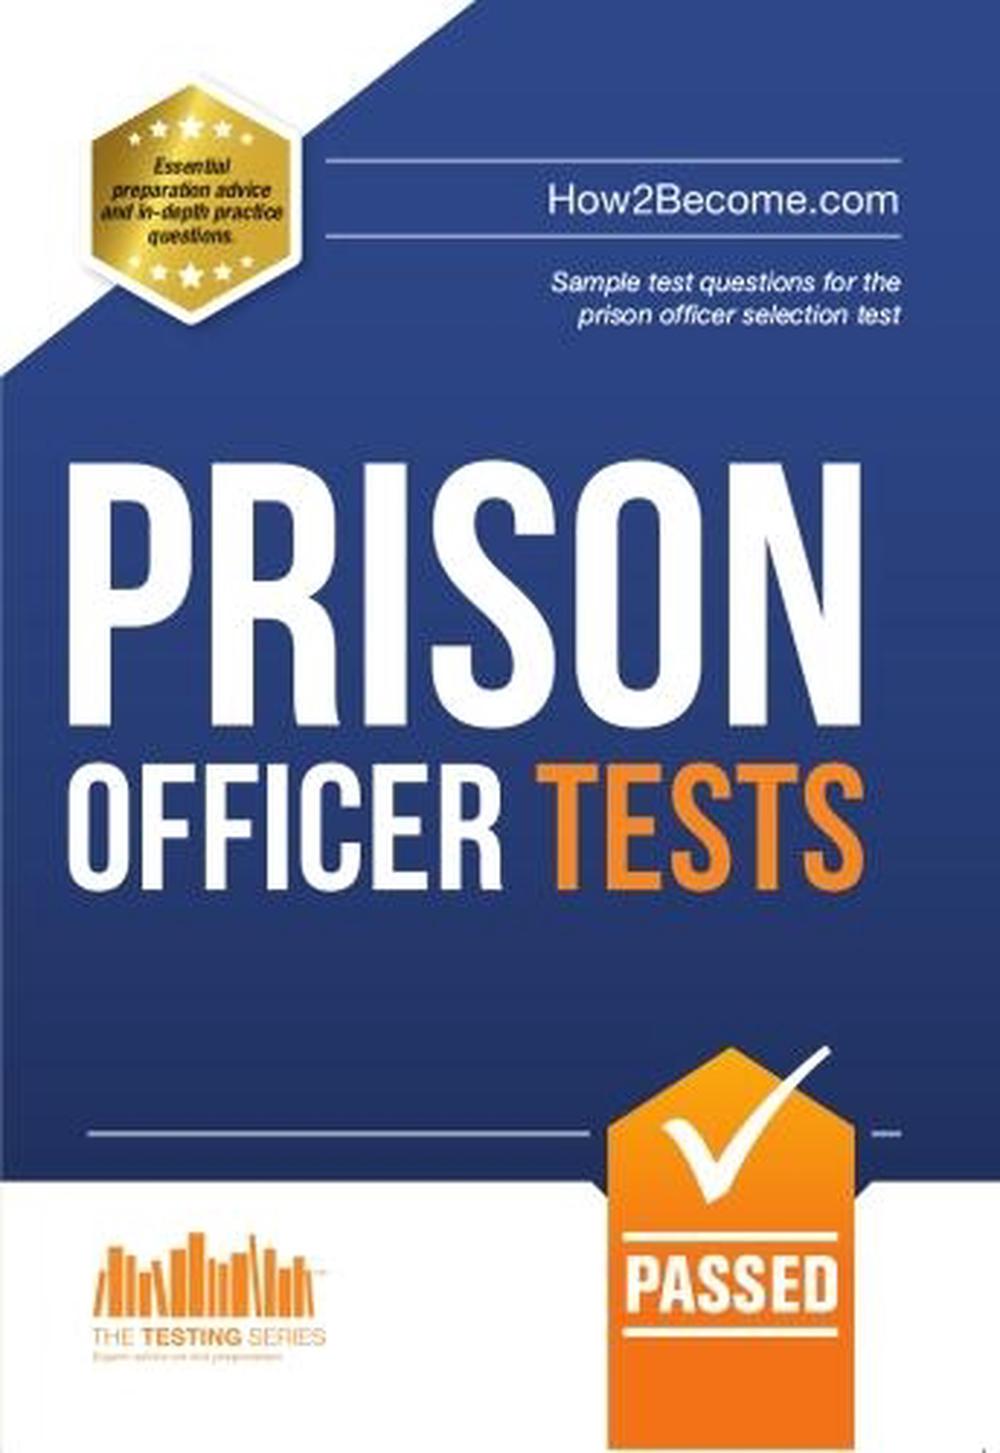 prison-officer-tests-by-richard-mcmunn-english-paperback-book-free-shipping-9781907558887-ebay